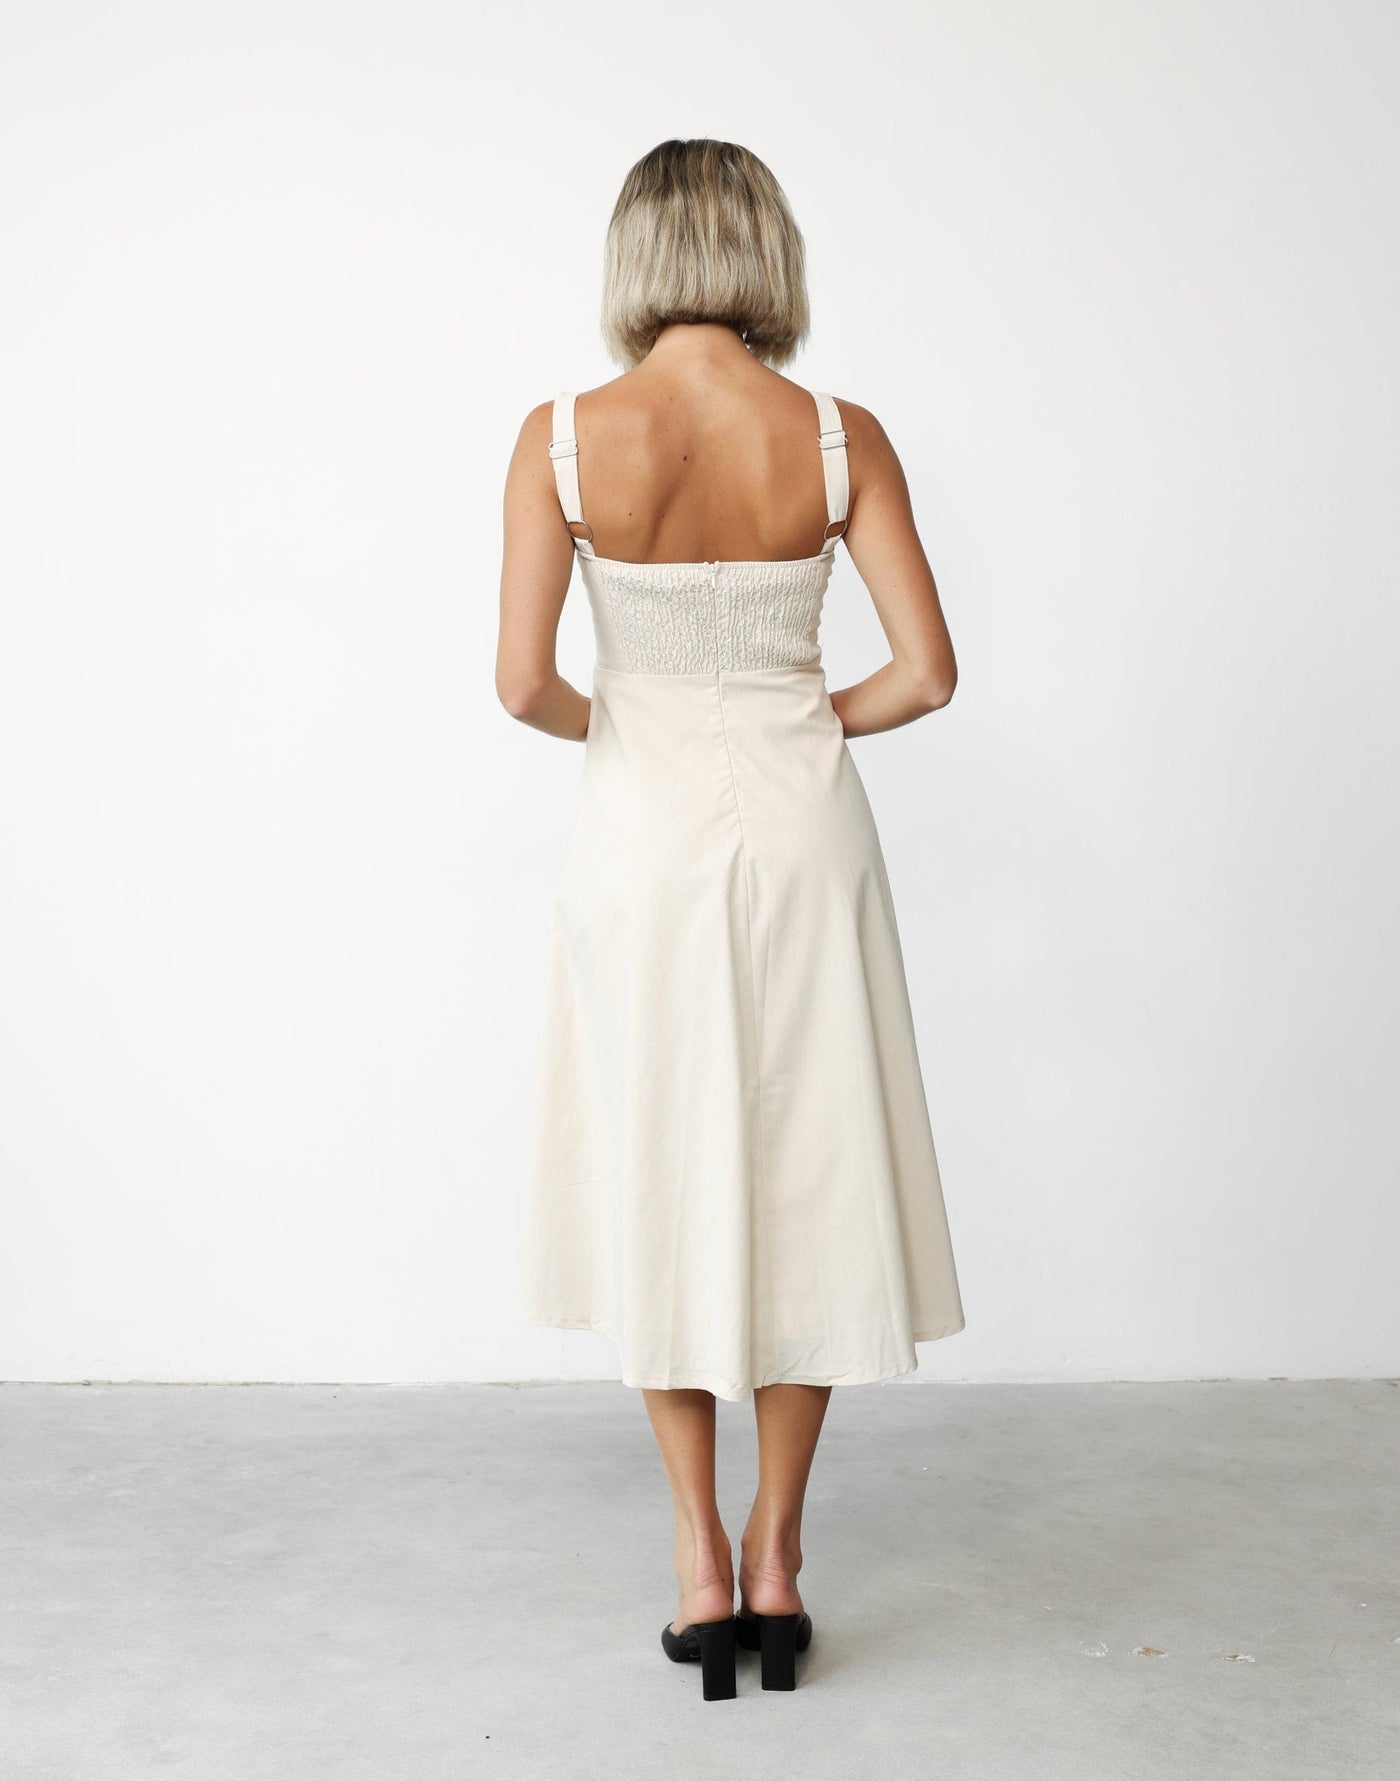 Kella Denim Maxi Dress (Beige) - Rounded Square Neckline A-line Maxi - Women's Dress - Charcoal Clothing